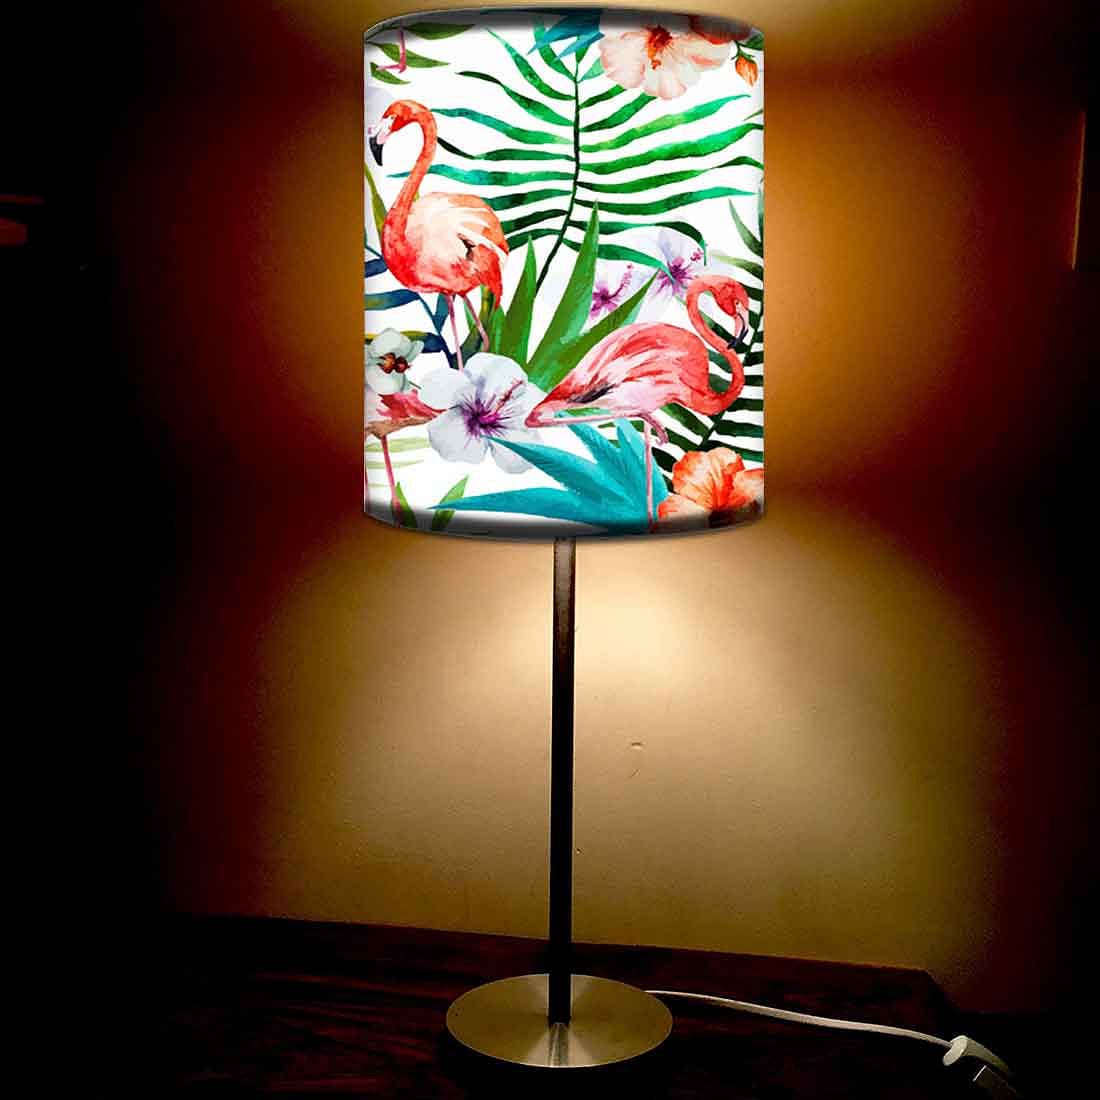 Stainless Steel Table Lamp for Living Room Bedroom Nutcase